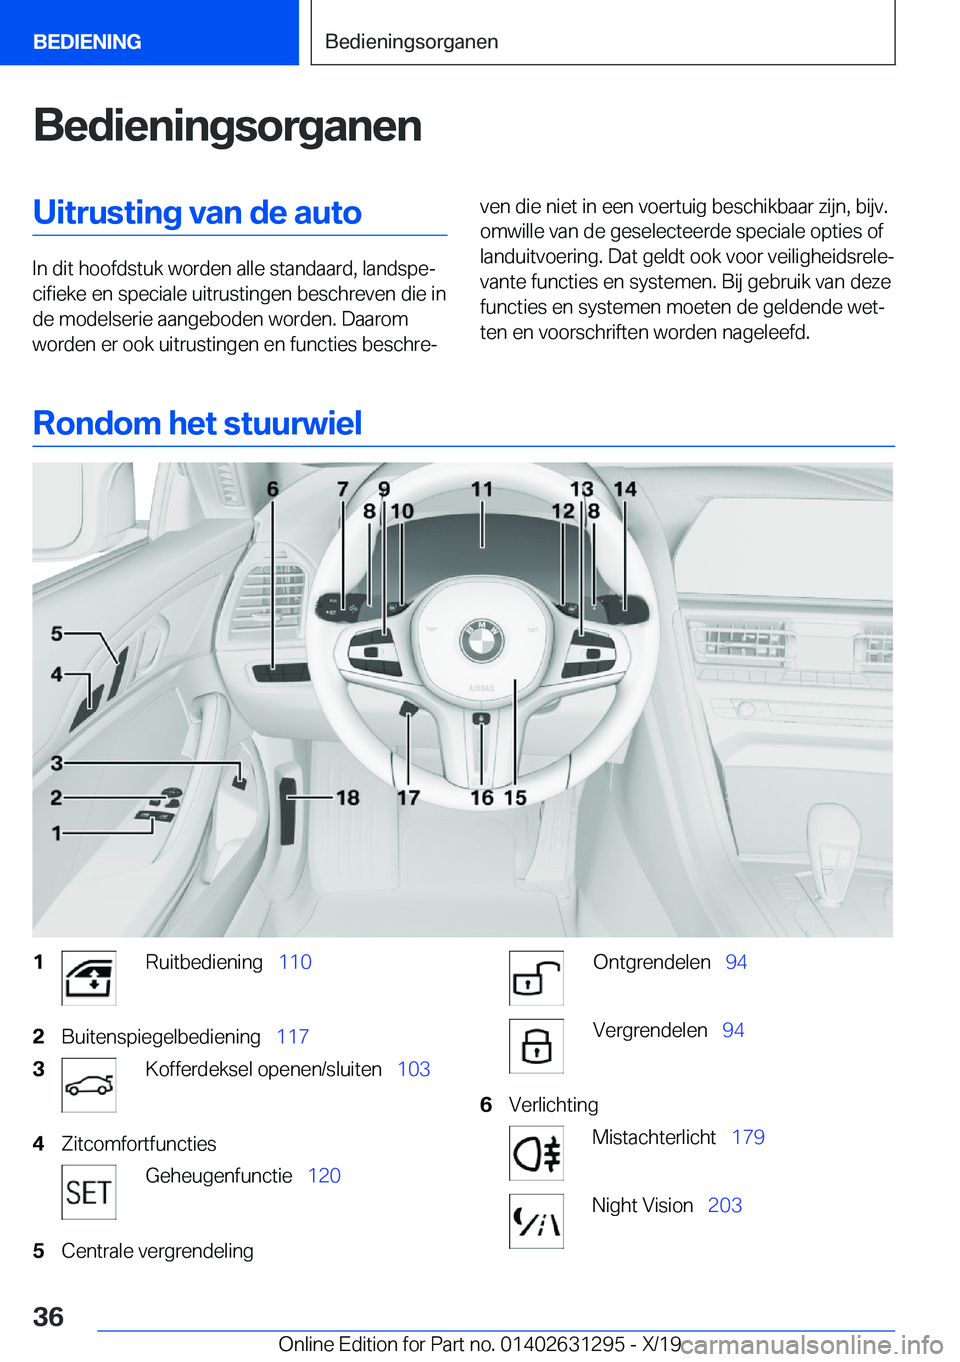 BMW M8 2020  Instructieboekjes (in Dutch) �B�e�d�i�e�n�i�n�g�s�o�r�g�a�n�e�n�U�i�t�r�u�s�t�i�n�g��v�a�n��d�e��a�u�t�o
�I�n��d�i�t��h�o�o�f�d�s�t�u�k��w�o�r�d�e�n��a�l�l�e��s�t�a�n�d�a�a�r�d�,��l�a�n�d�s�p�ej�c�i�f�i�e�k�e��e�n��s�